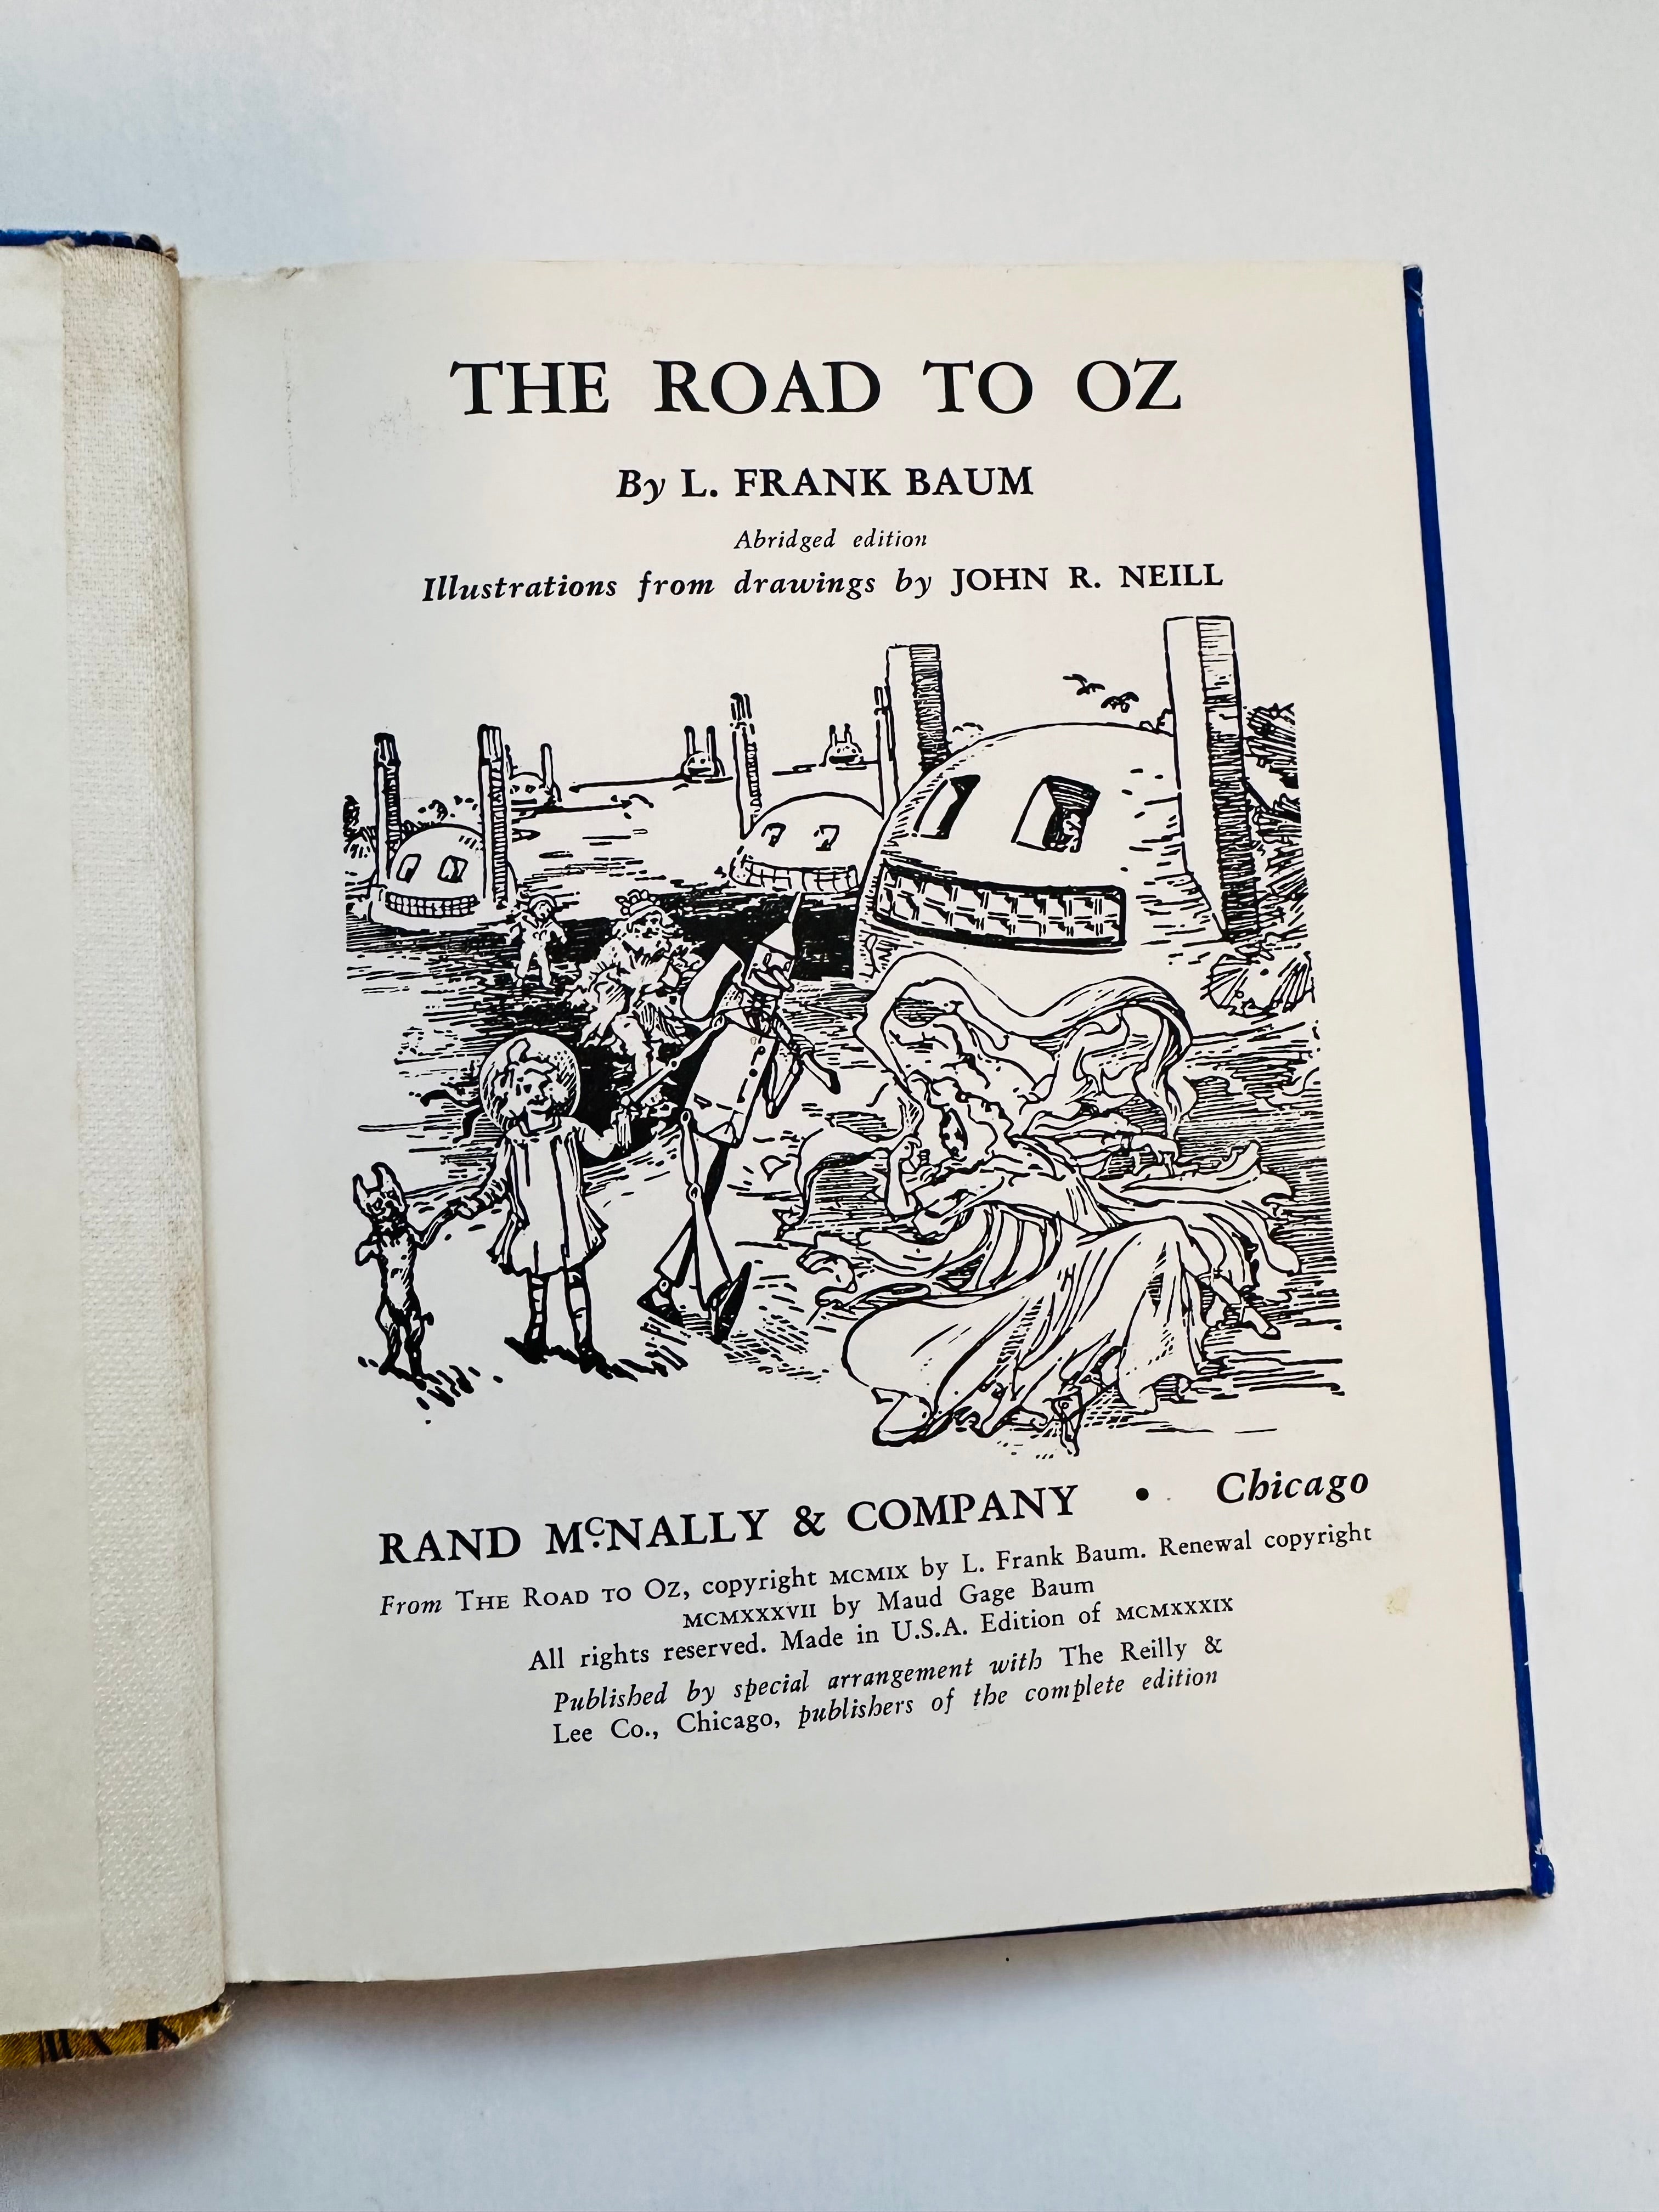 The road to Oz Junior edition rare book 1939